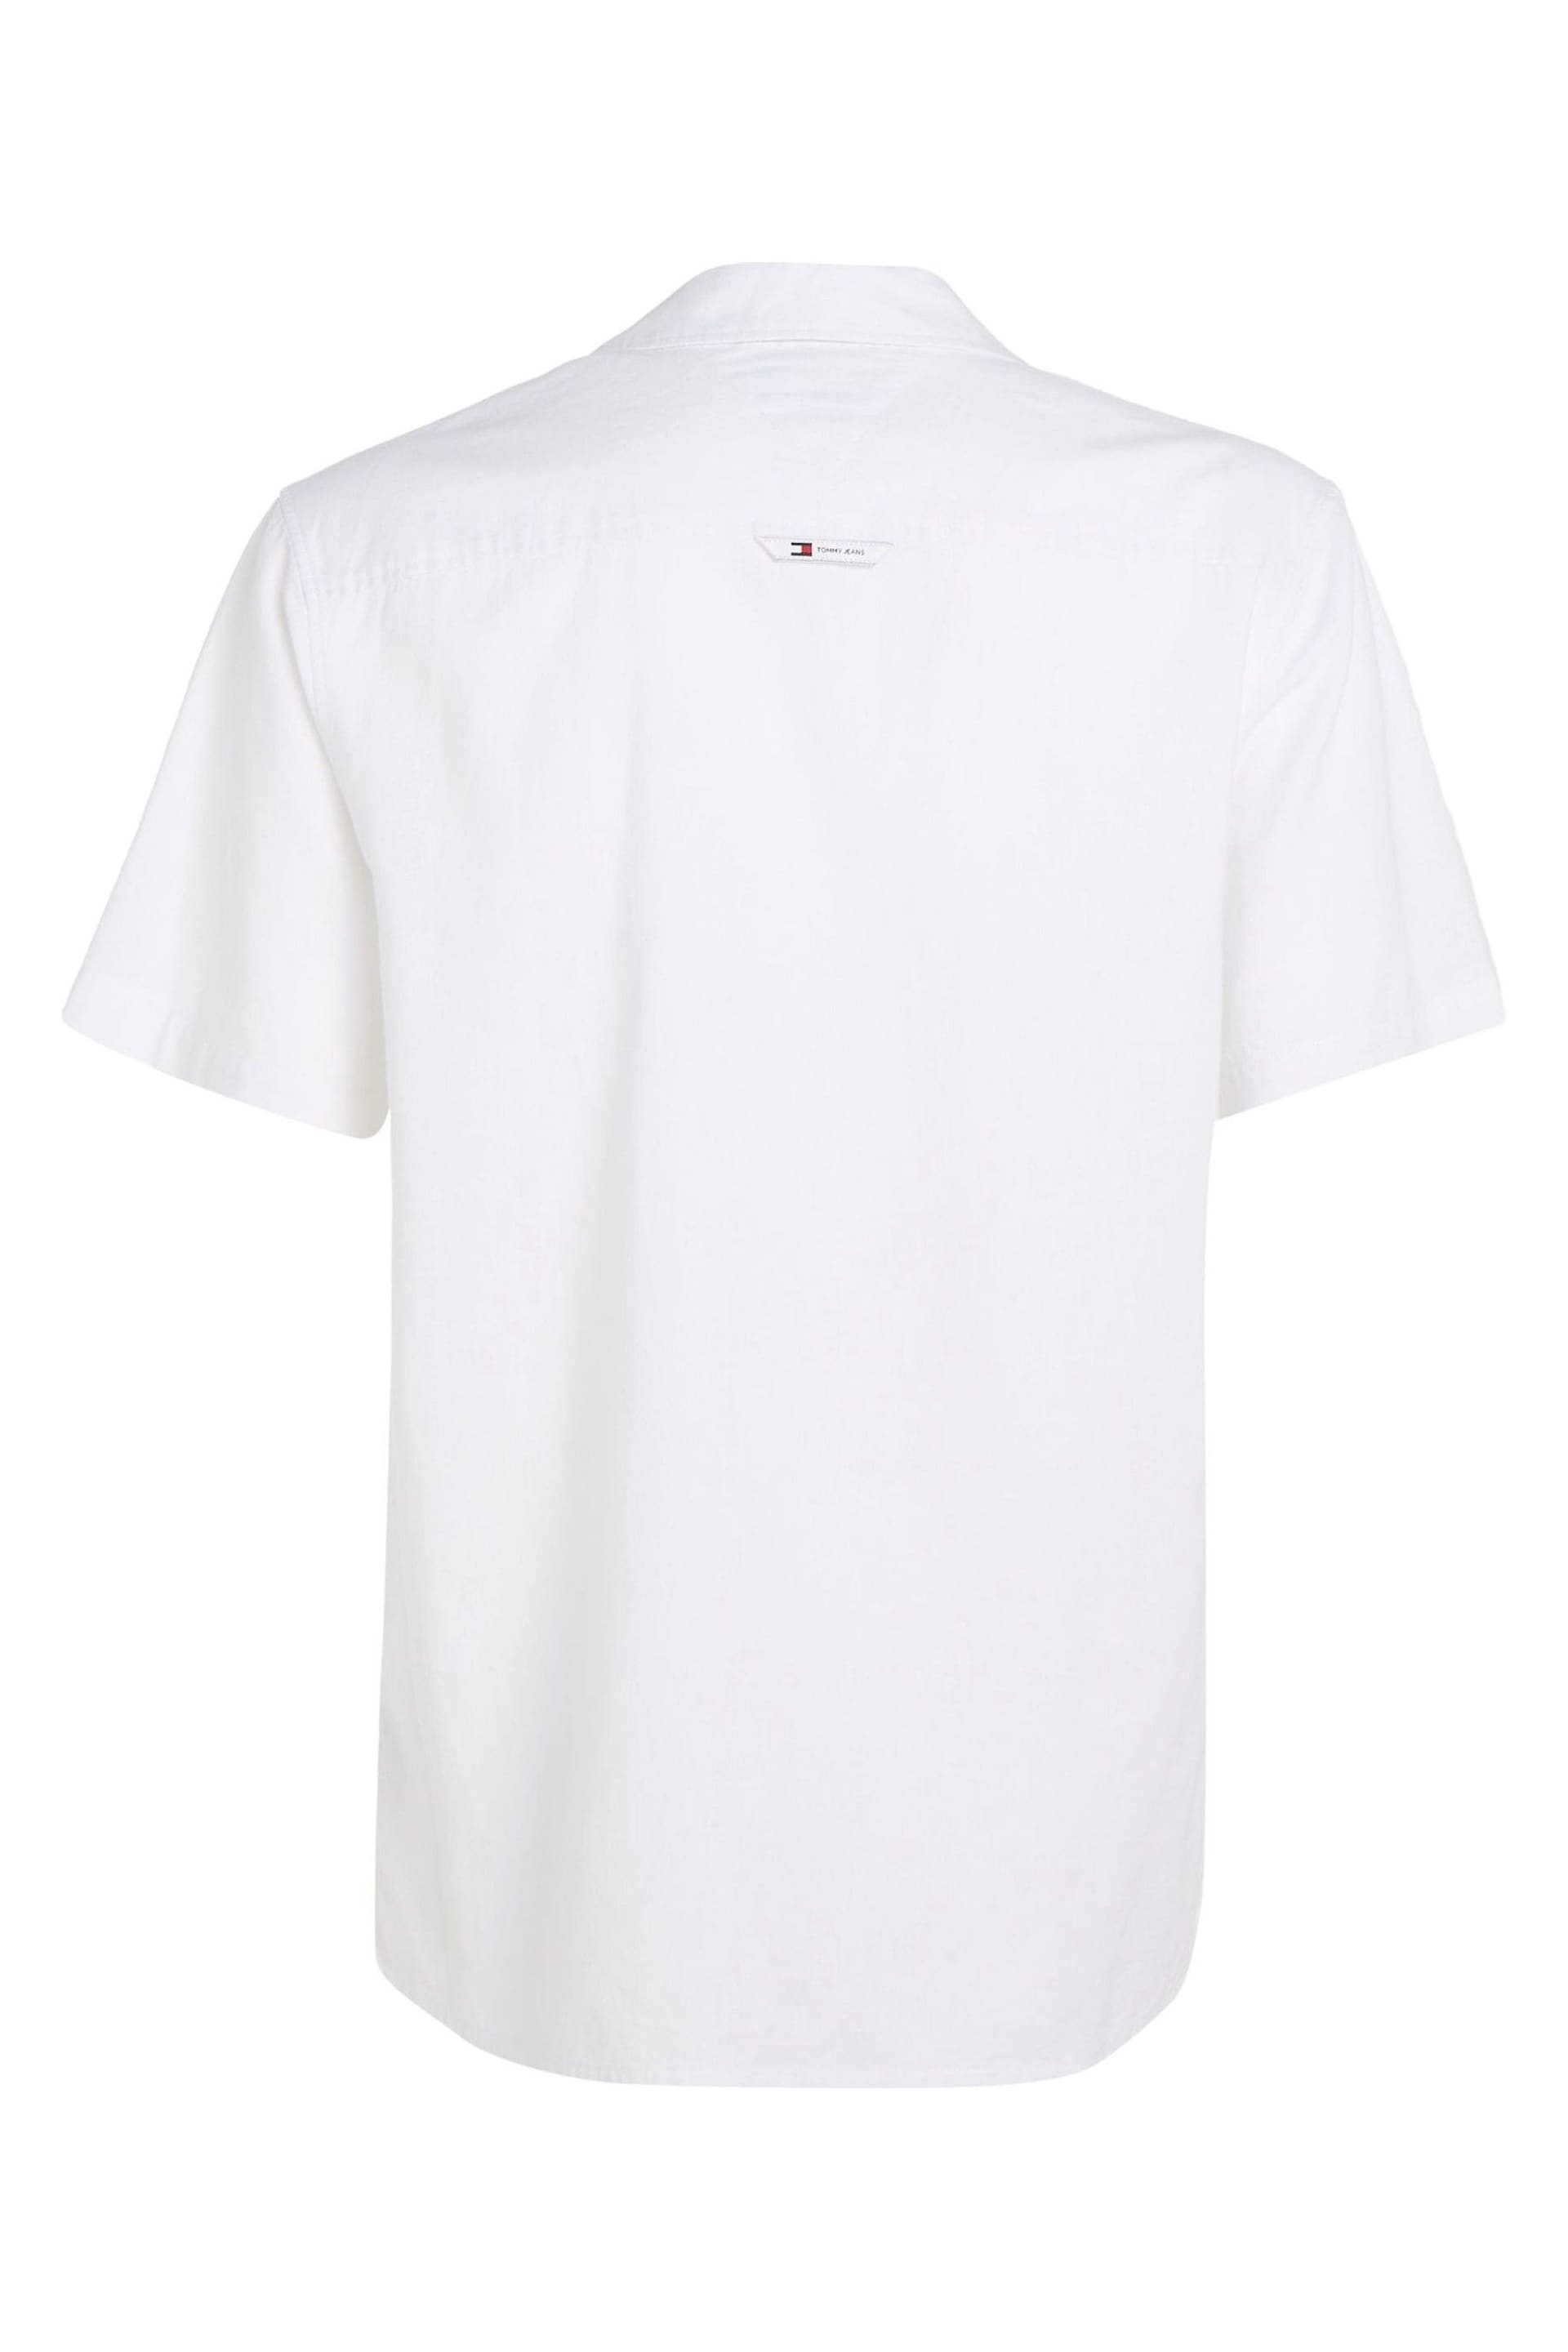 Tommy Jeans Linen Blend Camp Shirt - Image 5 of 6